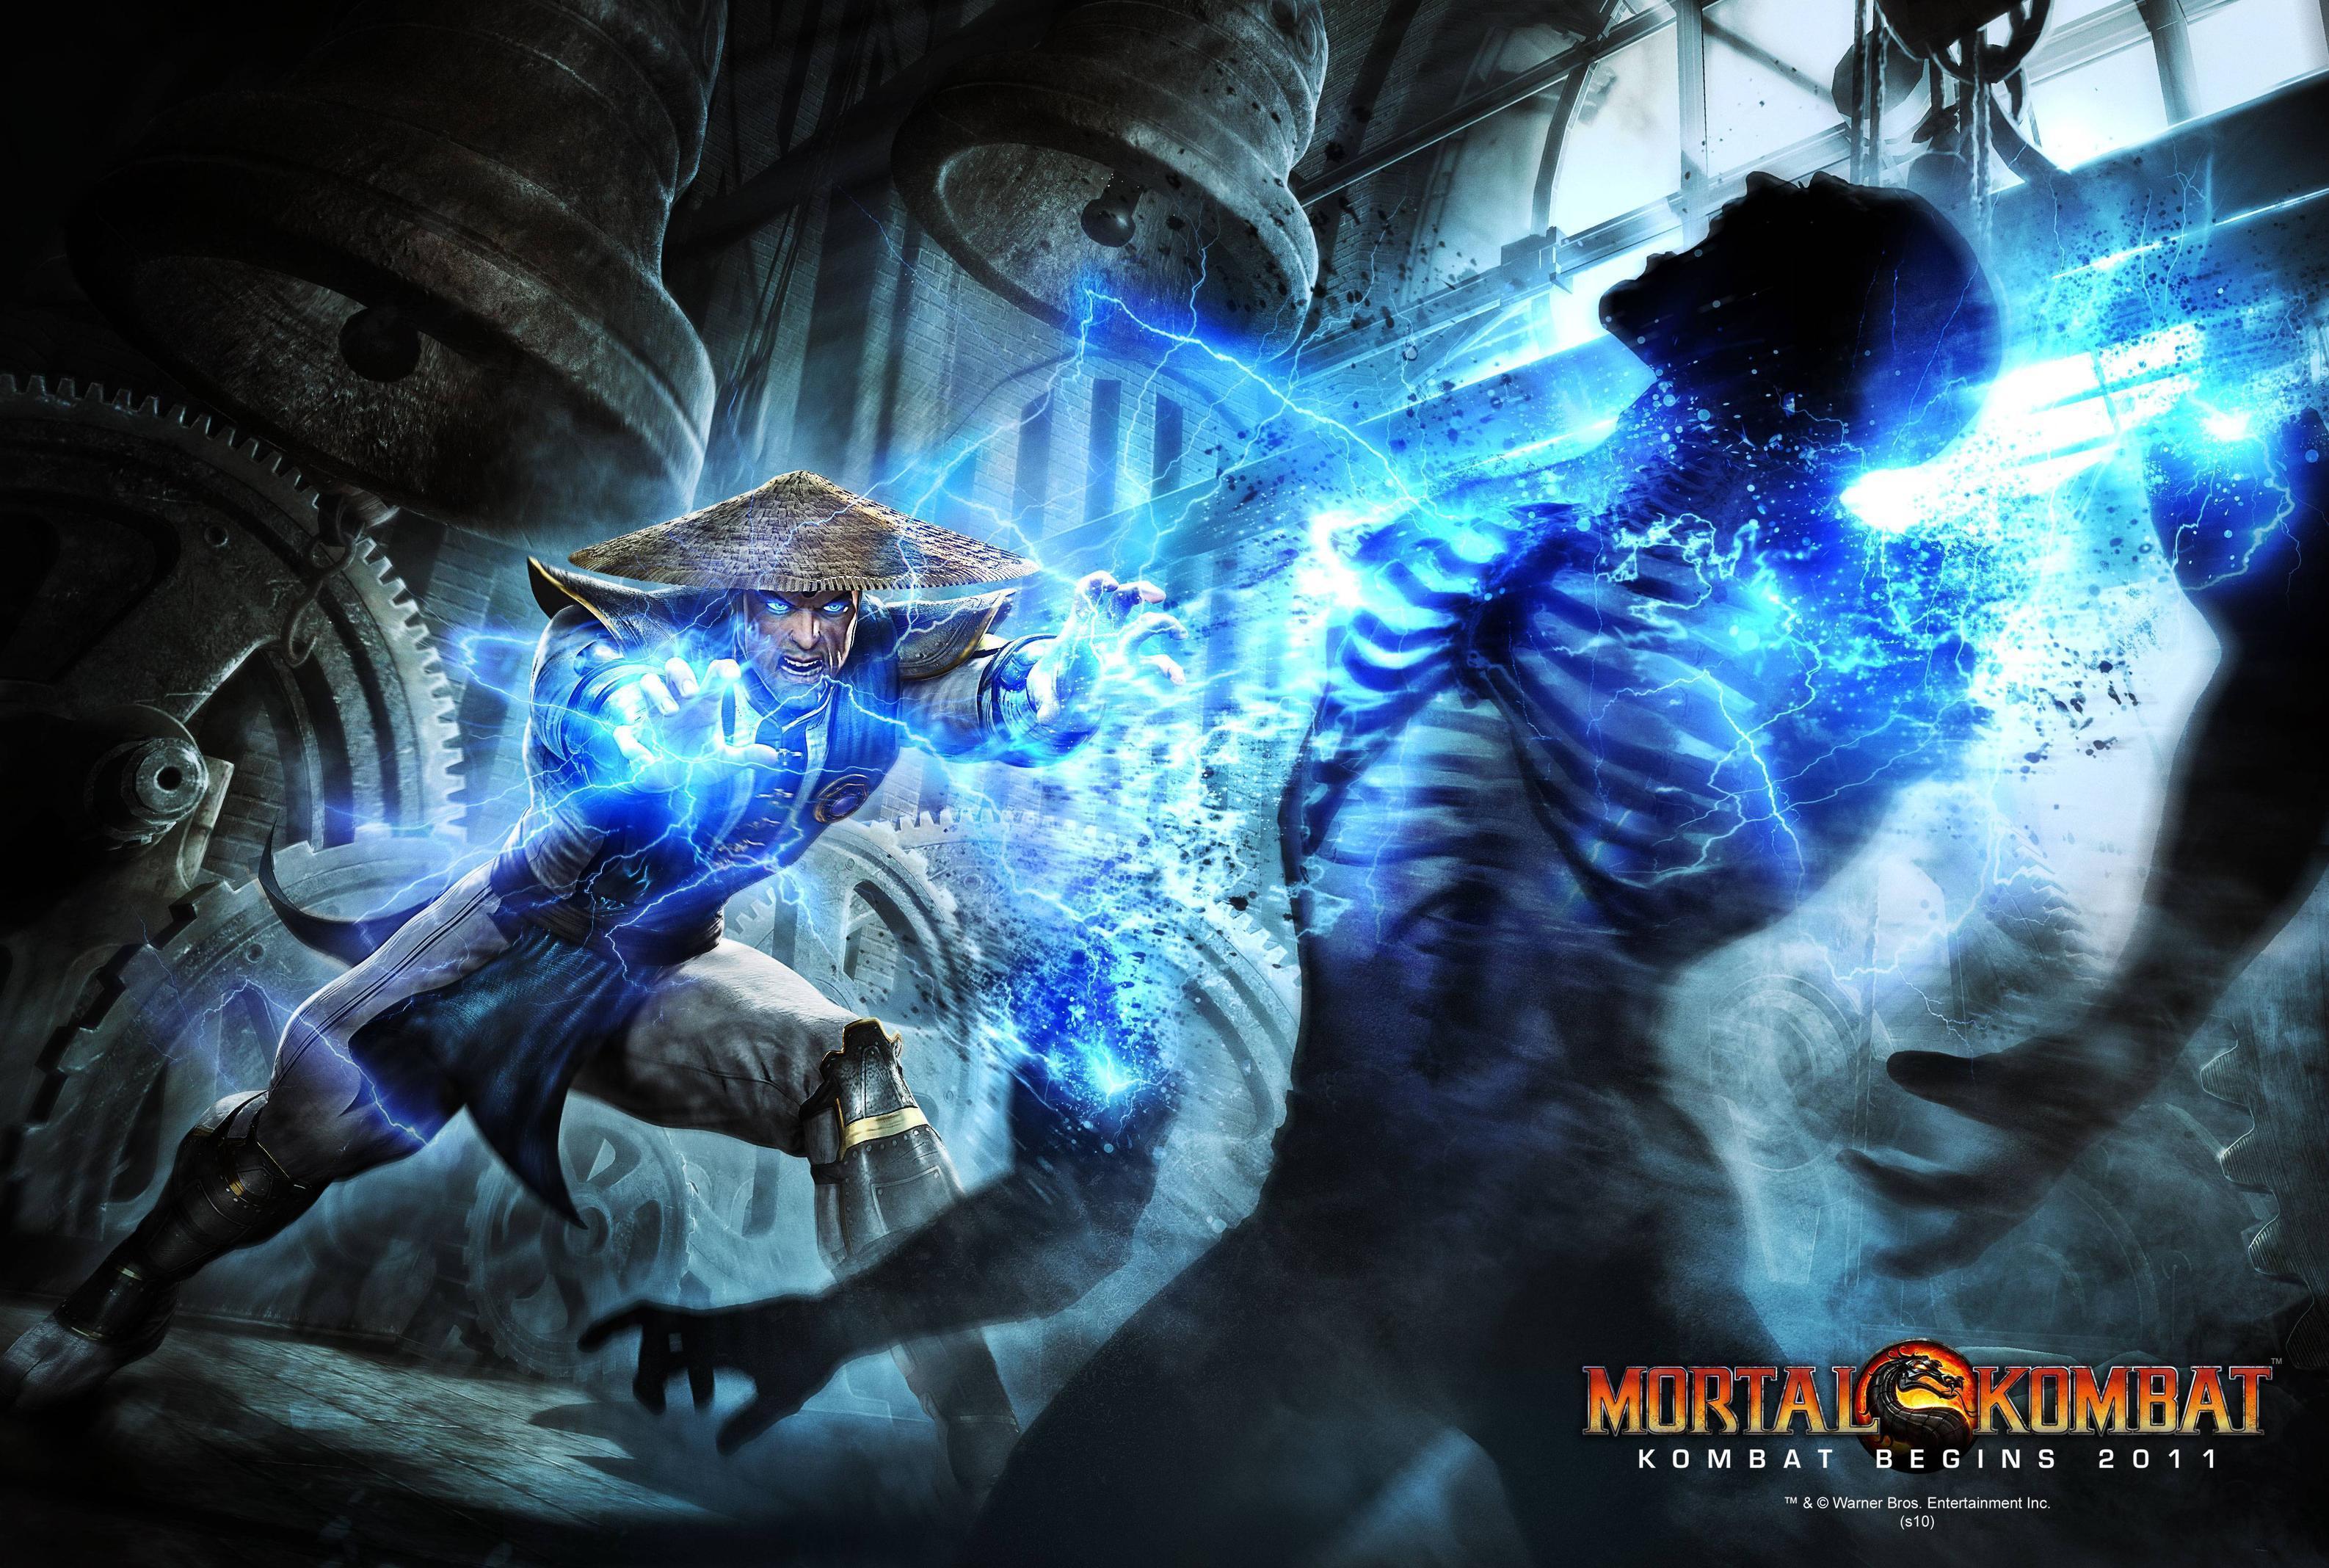 totalmortalkombat.com - Mortal Kombat